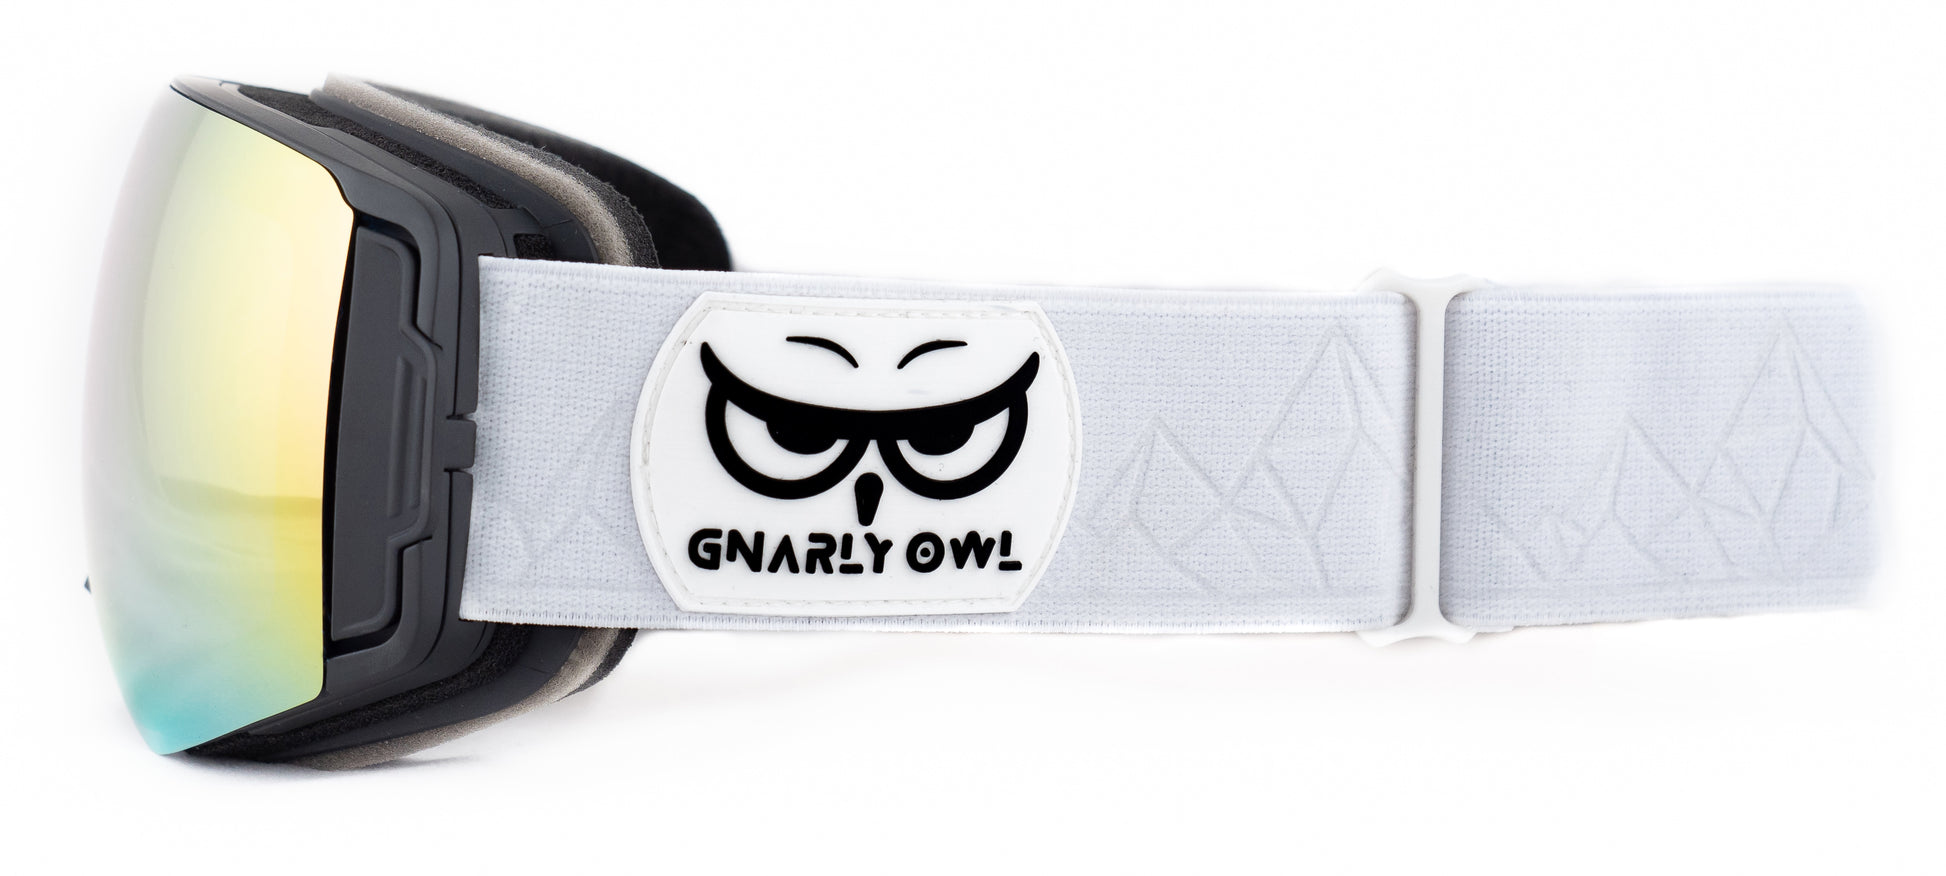 Gnarly Owl polarizační lyžařské snowboardové skialpové splitboardové brýle česká značka růžový REVO zorník magnetické výměnné zorníky bezrámečkový design gumové logo sova embosovaný bílý pásek